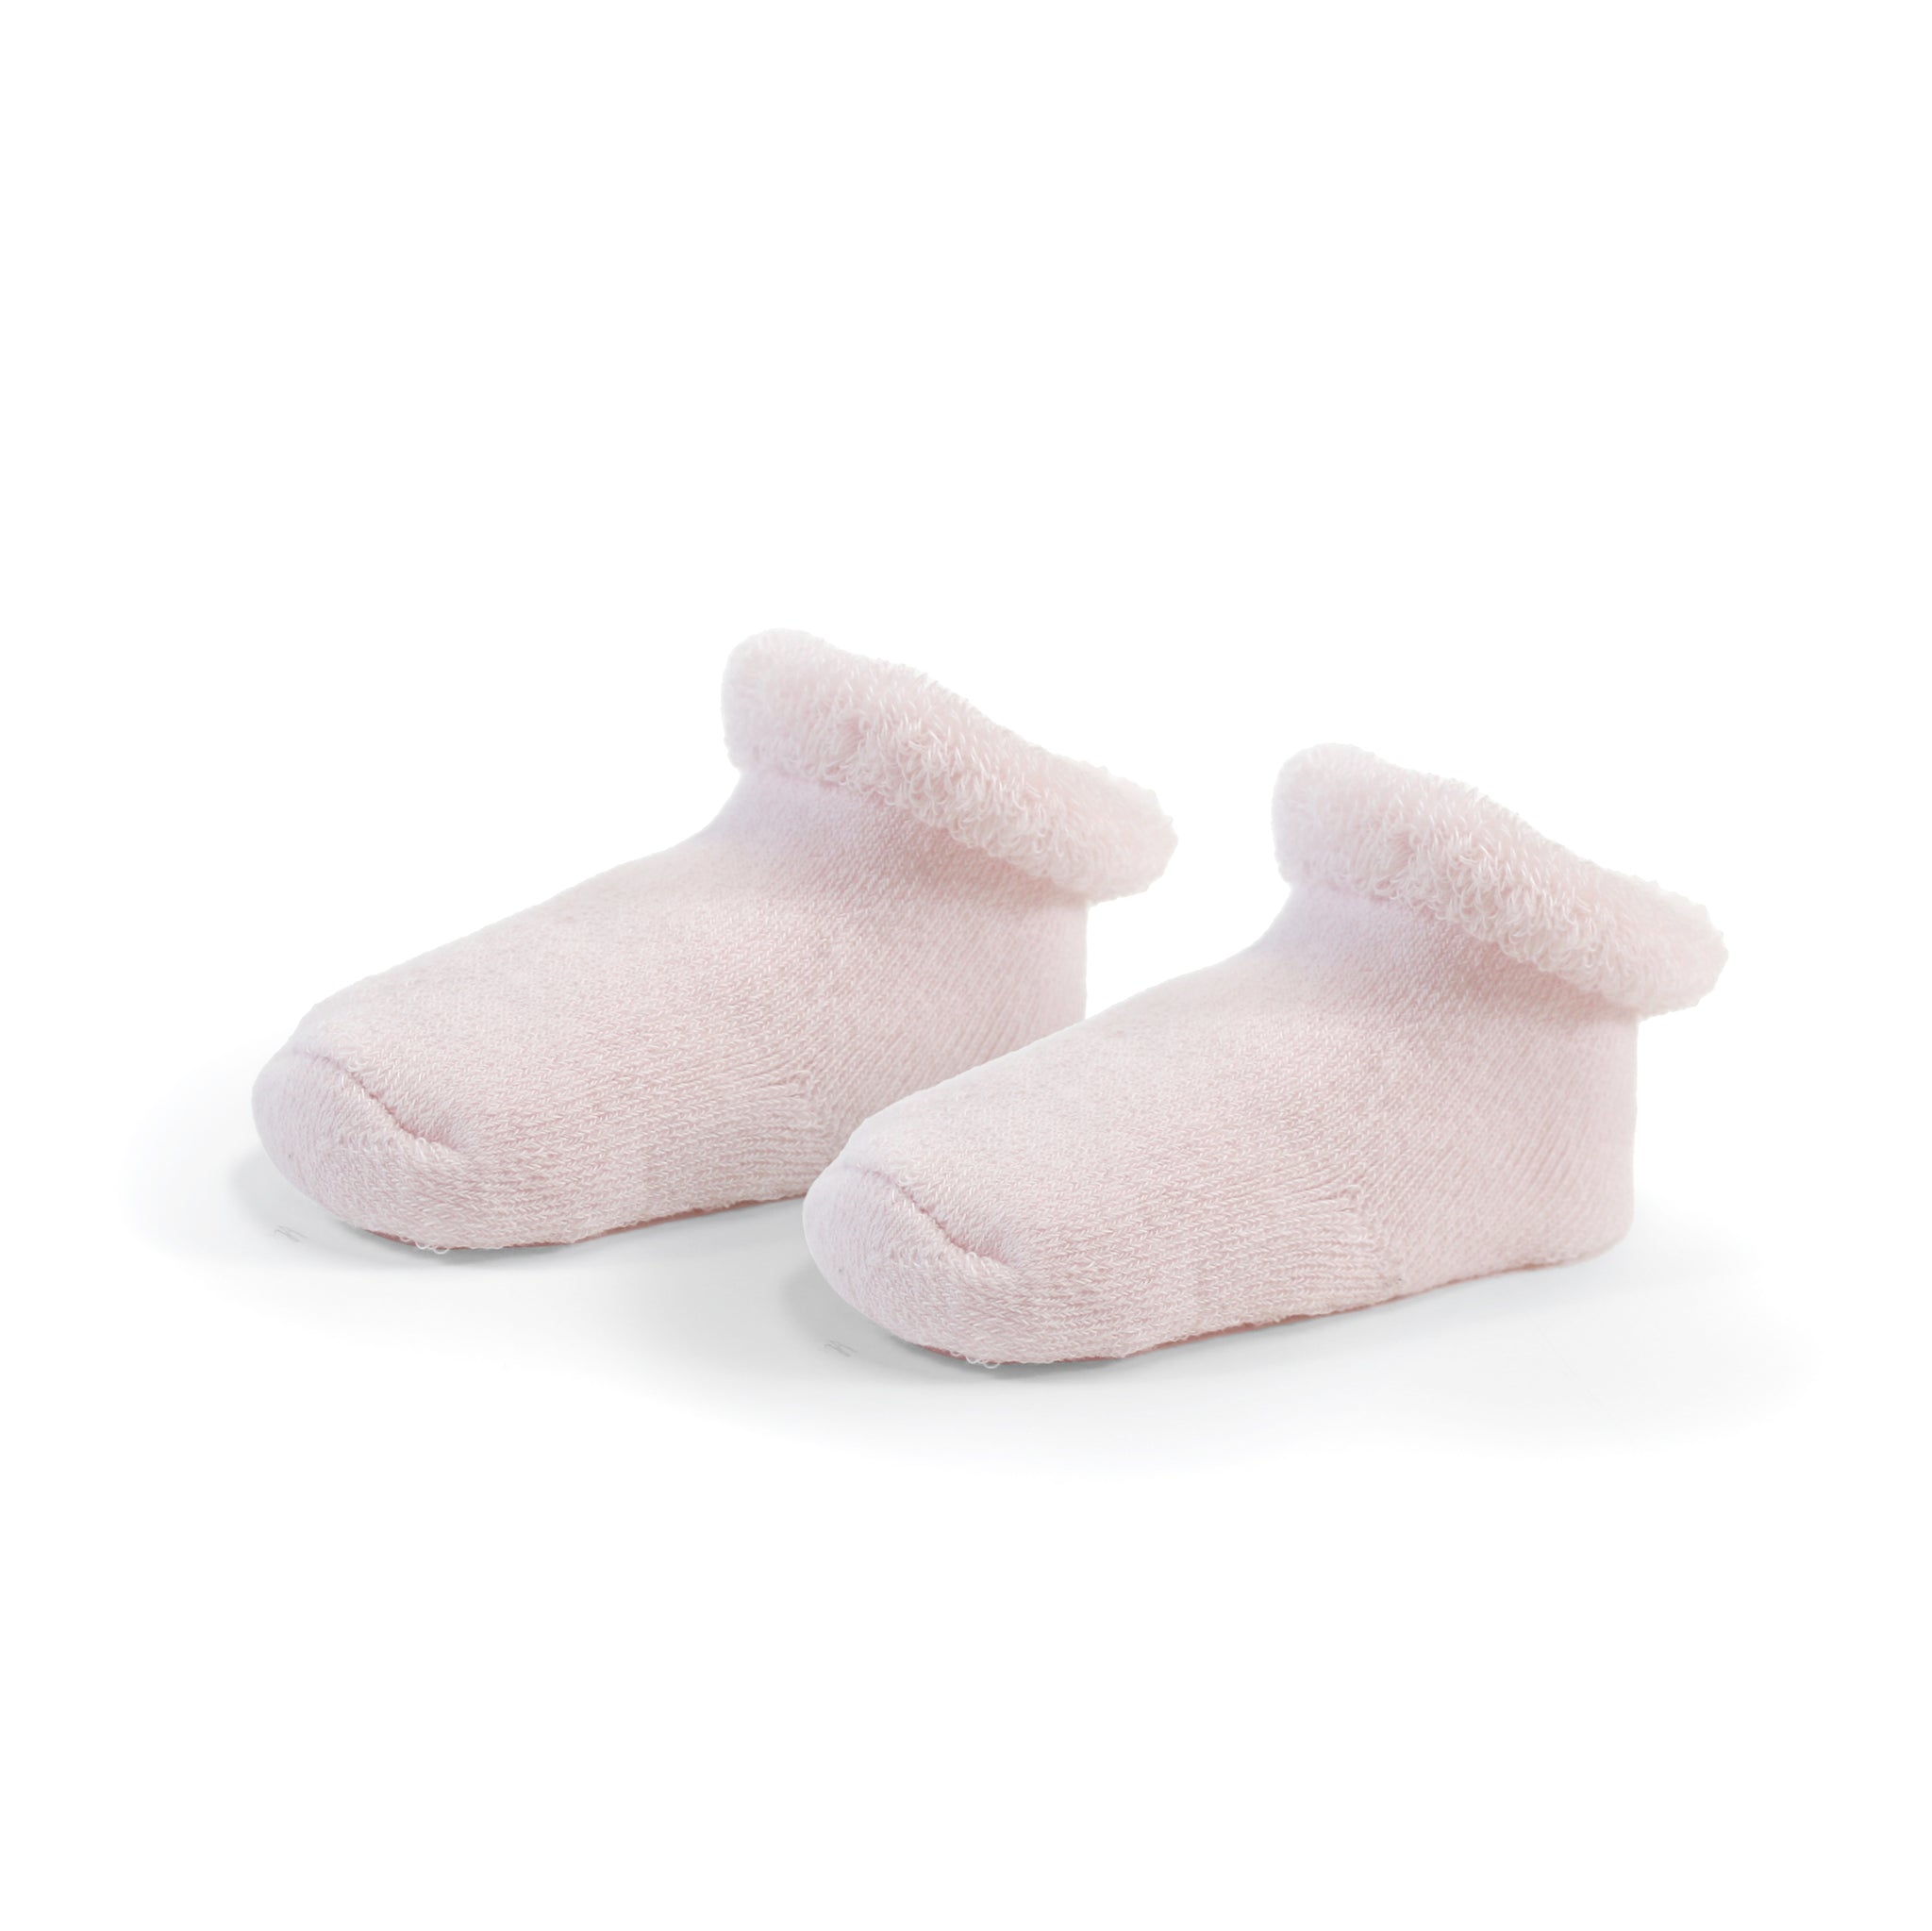 Cozy Chic Infant Socks Pack – Emerson Rose